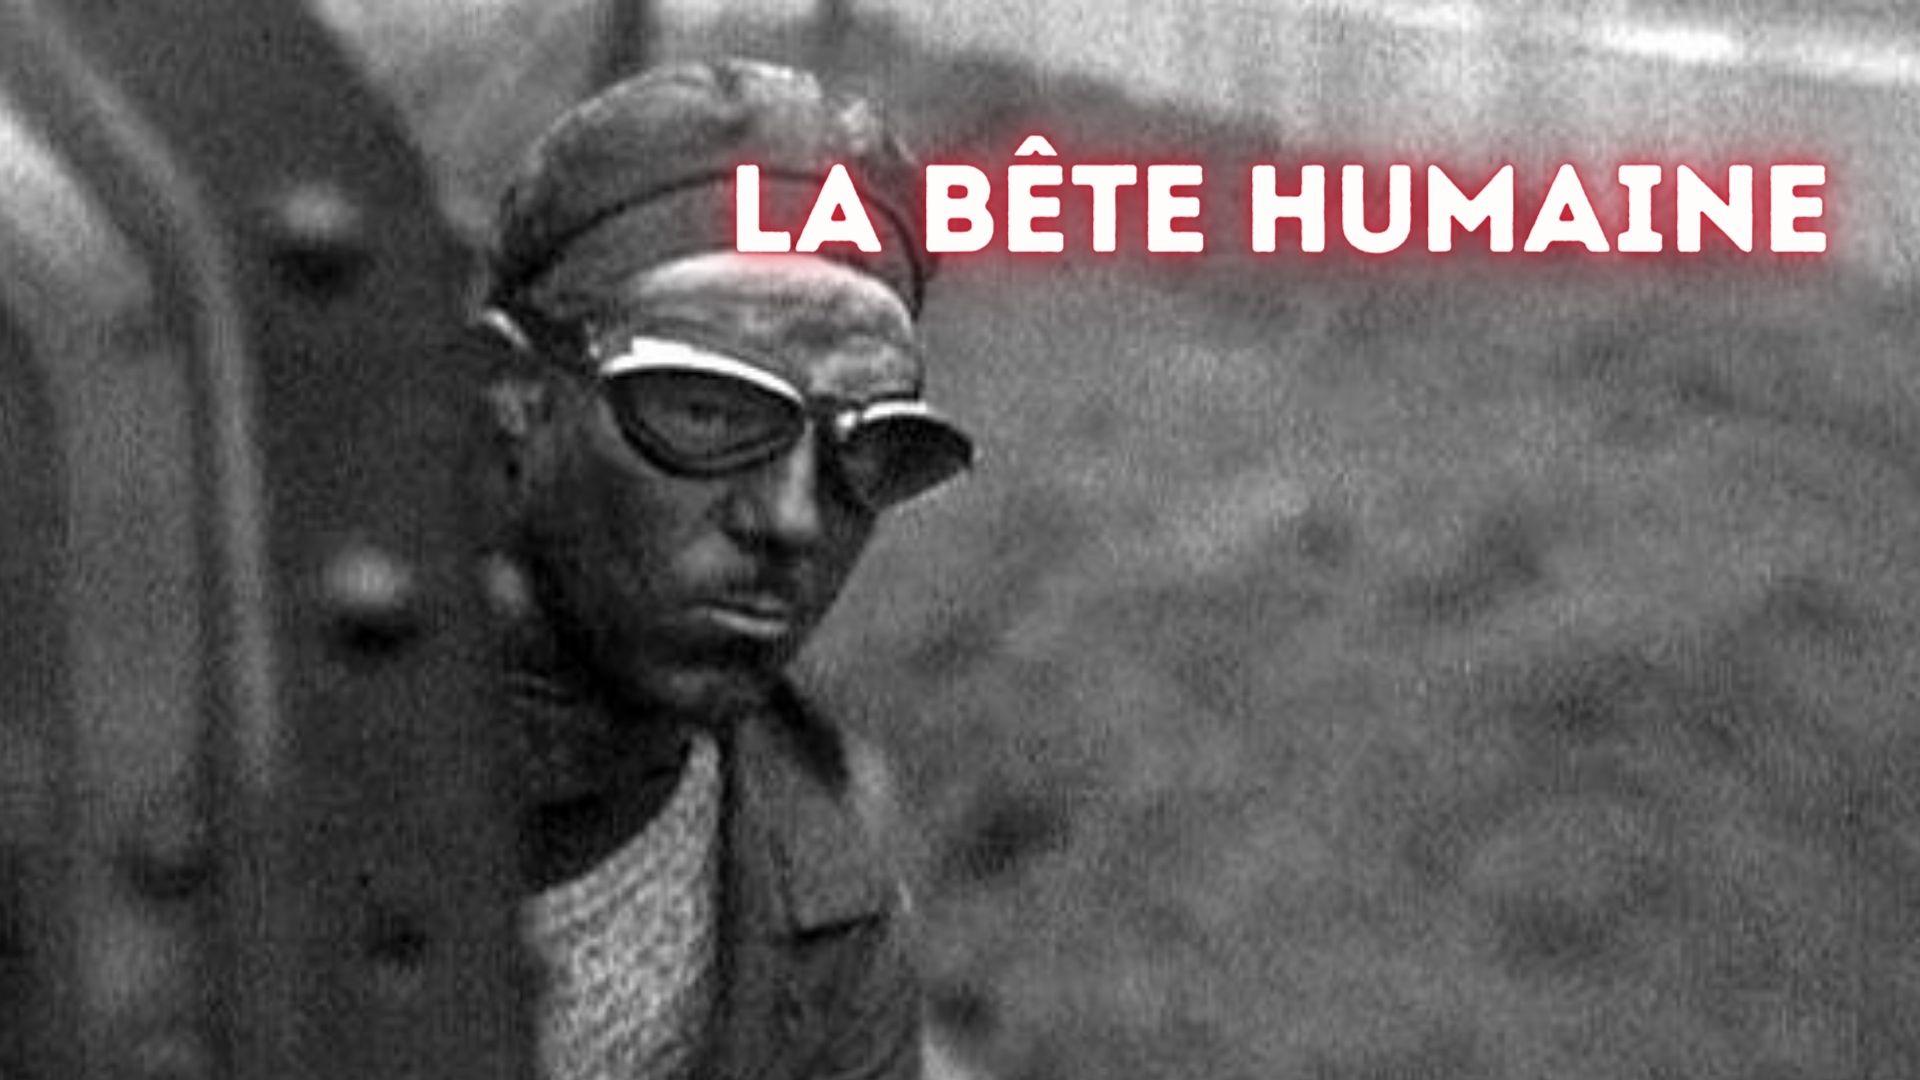 La Bete Humaine (1938): Sands Films Cinema Club online presentation